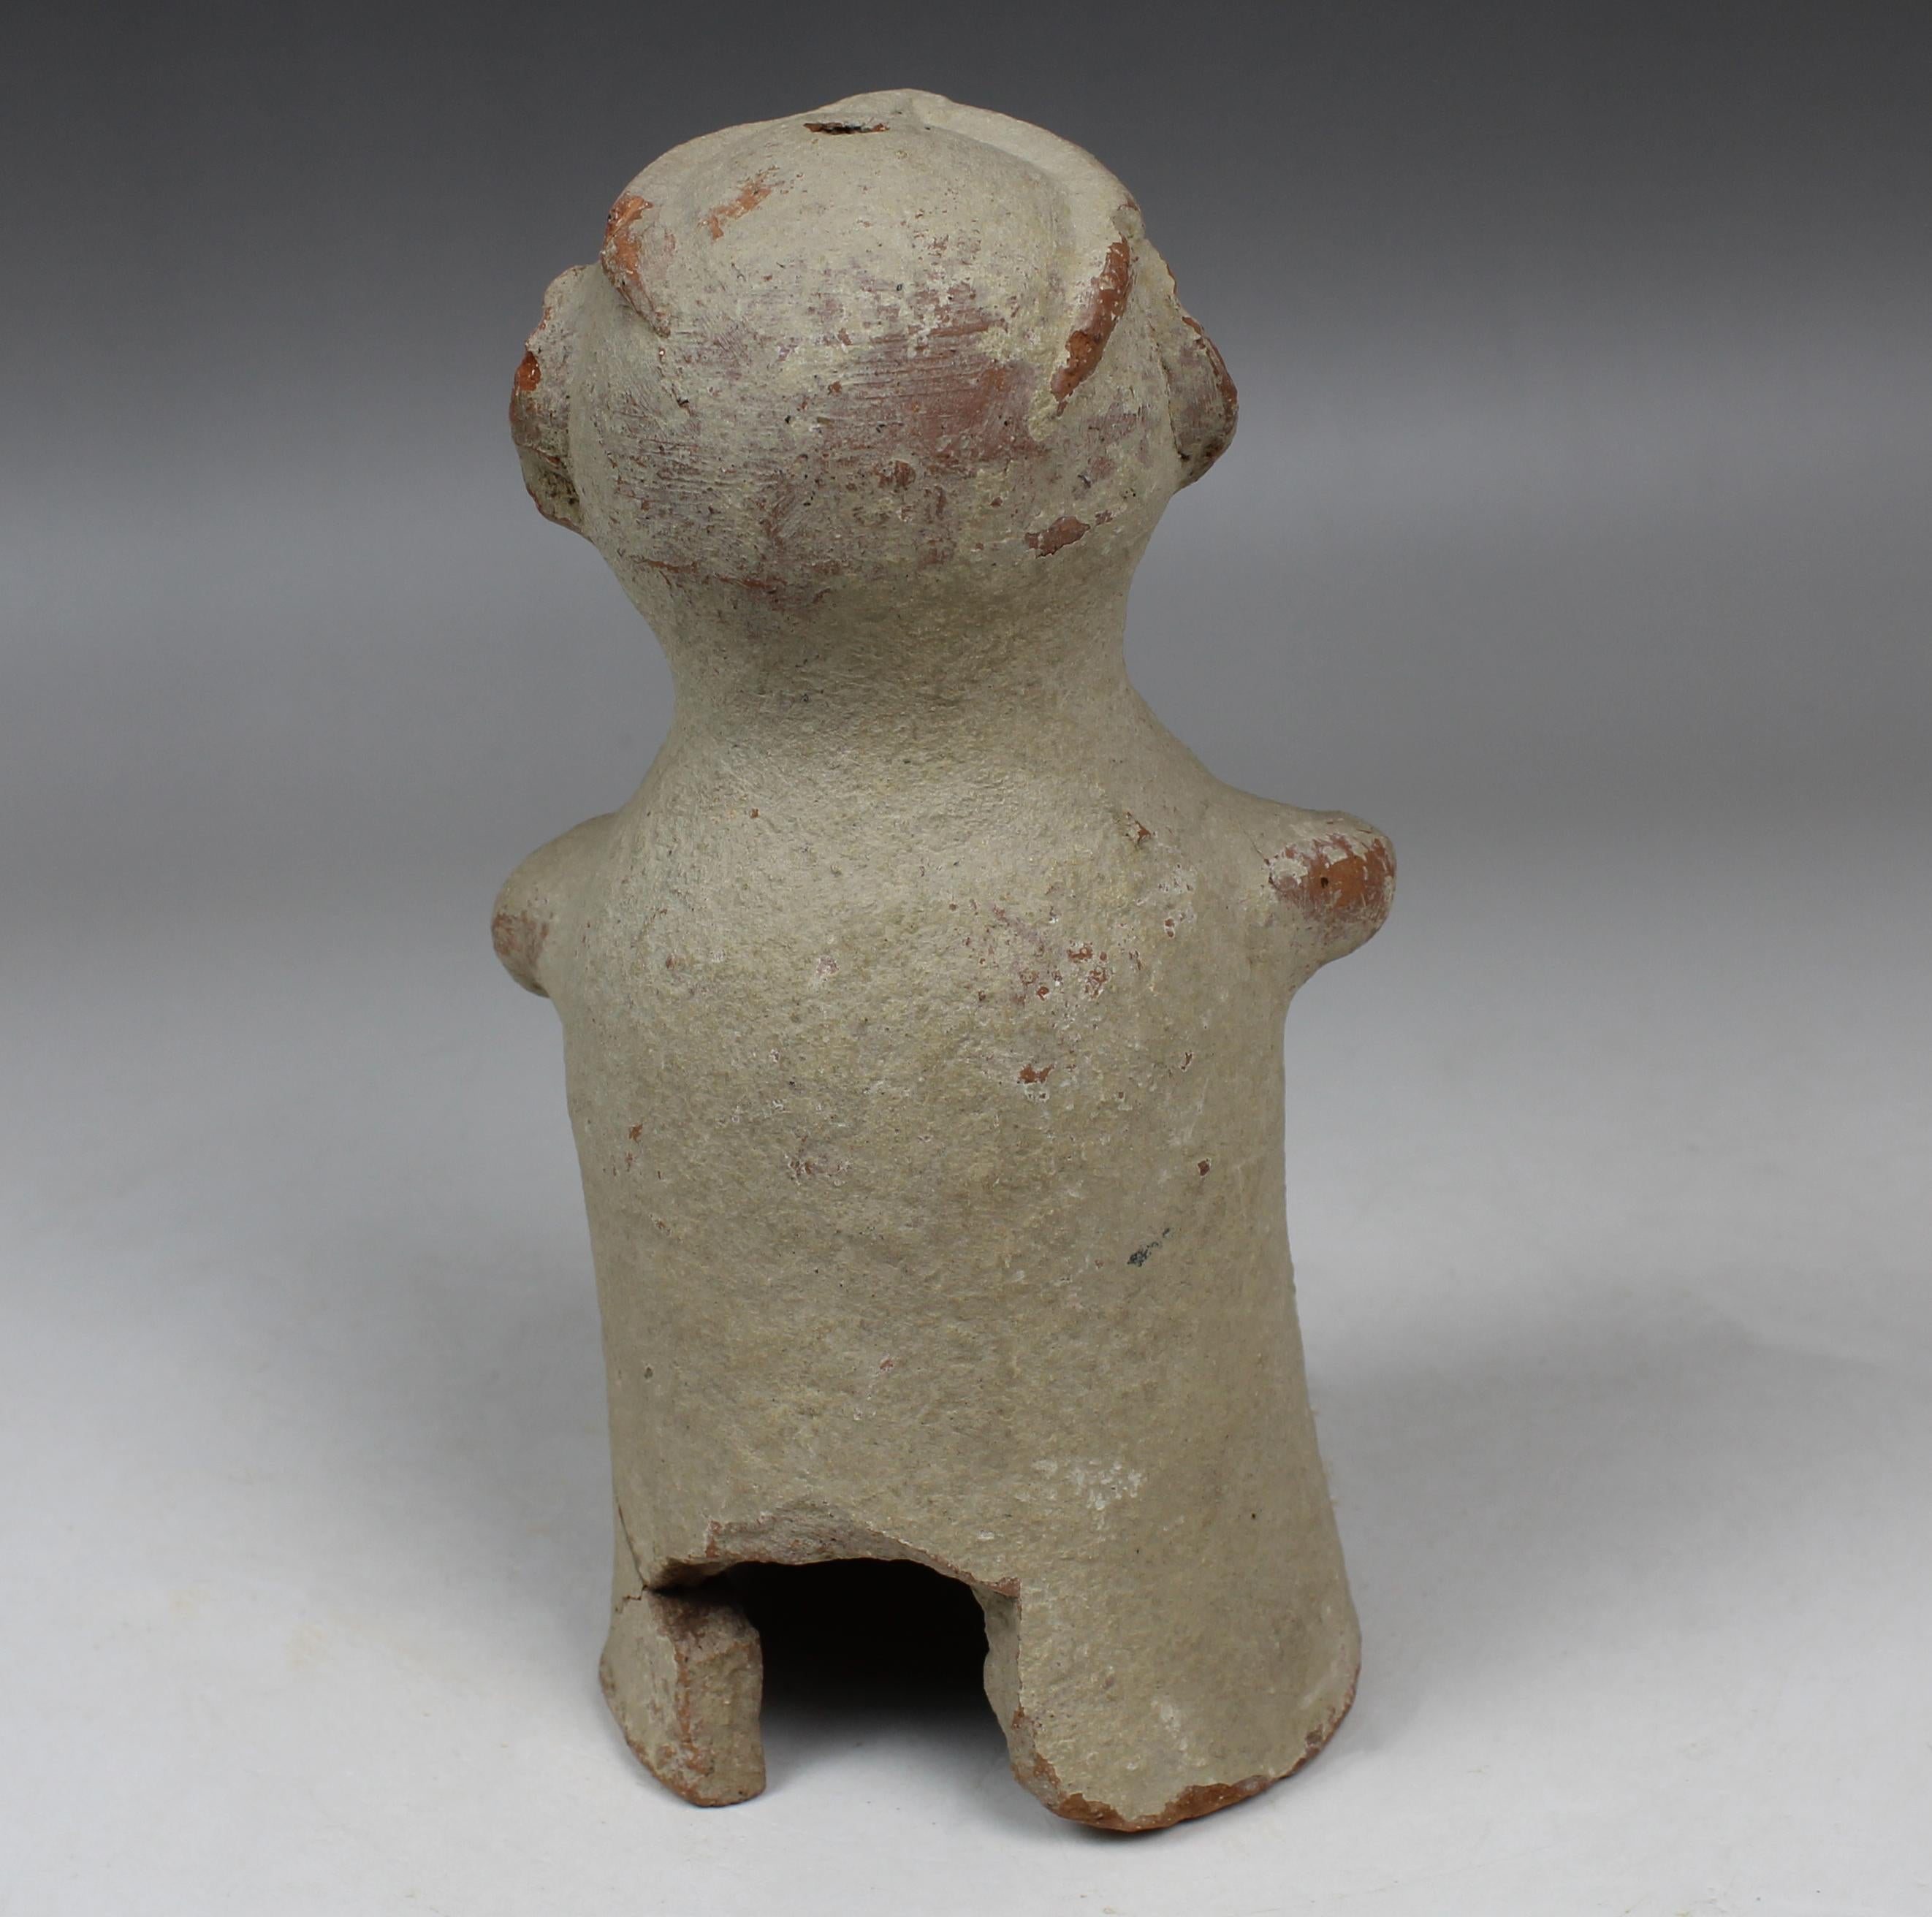 Pakistani Bronze Age figurine of fertility goddess